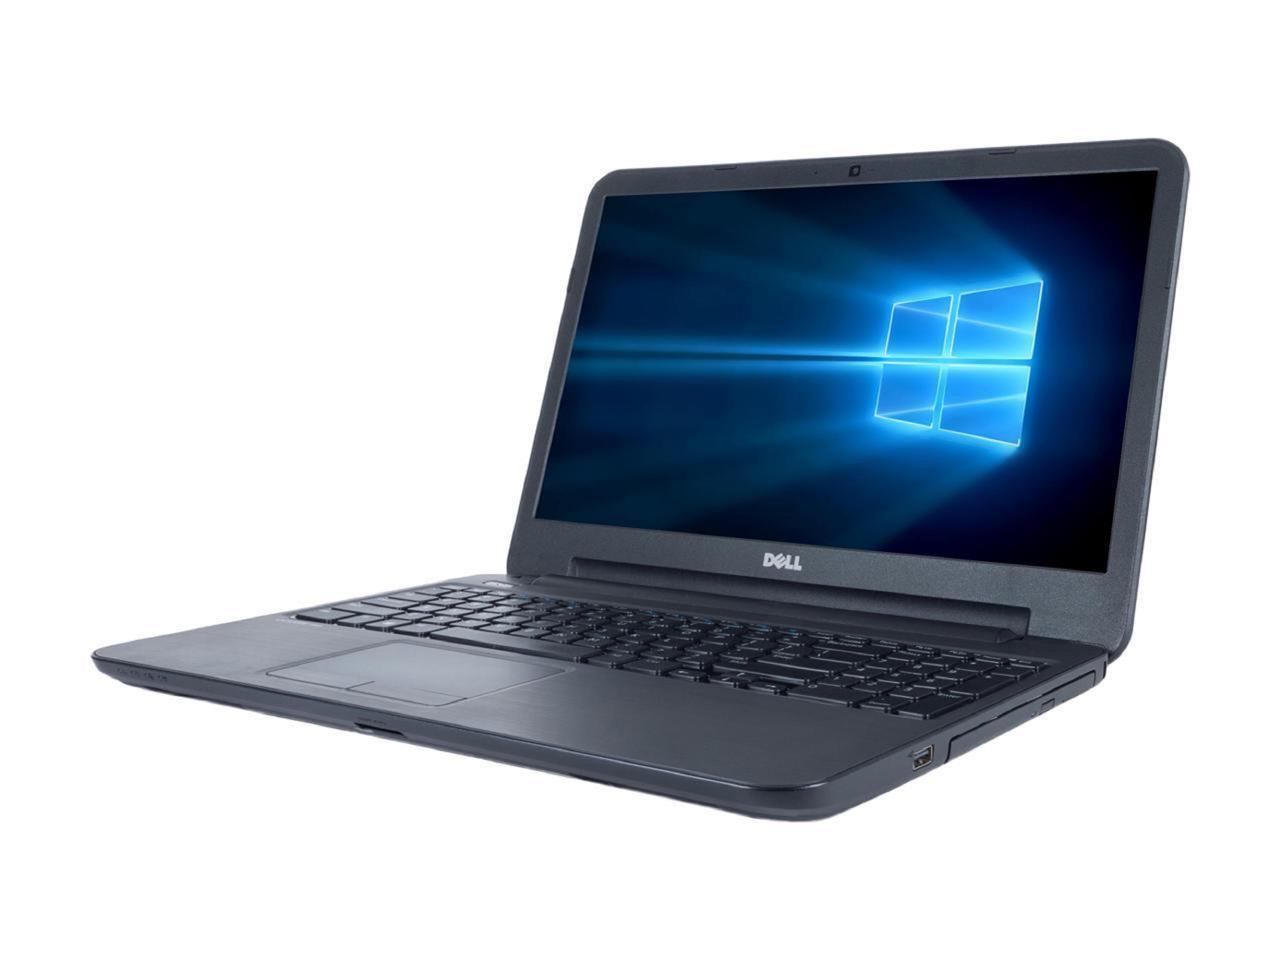 DELL Precision E3540 Laptop Computer, 1.70 GHz Intel i5 Dual Core Gen 4, 8GB DDR4 RAM, 256GB SSD Hard Drive, Windows 10 Professional 64 Bit, 15" Screen